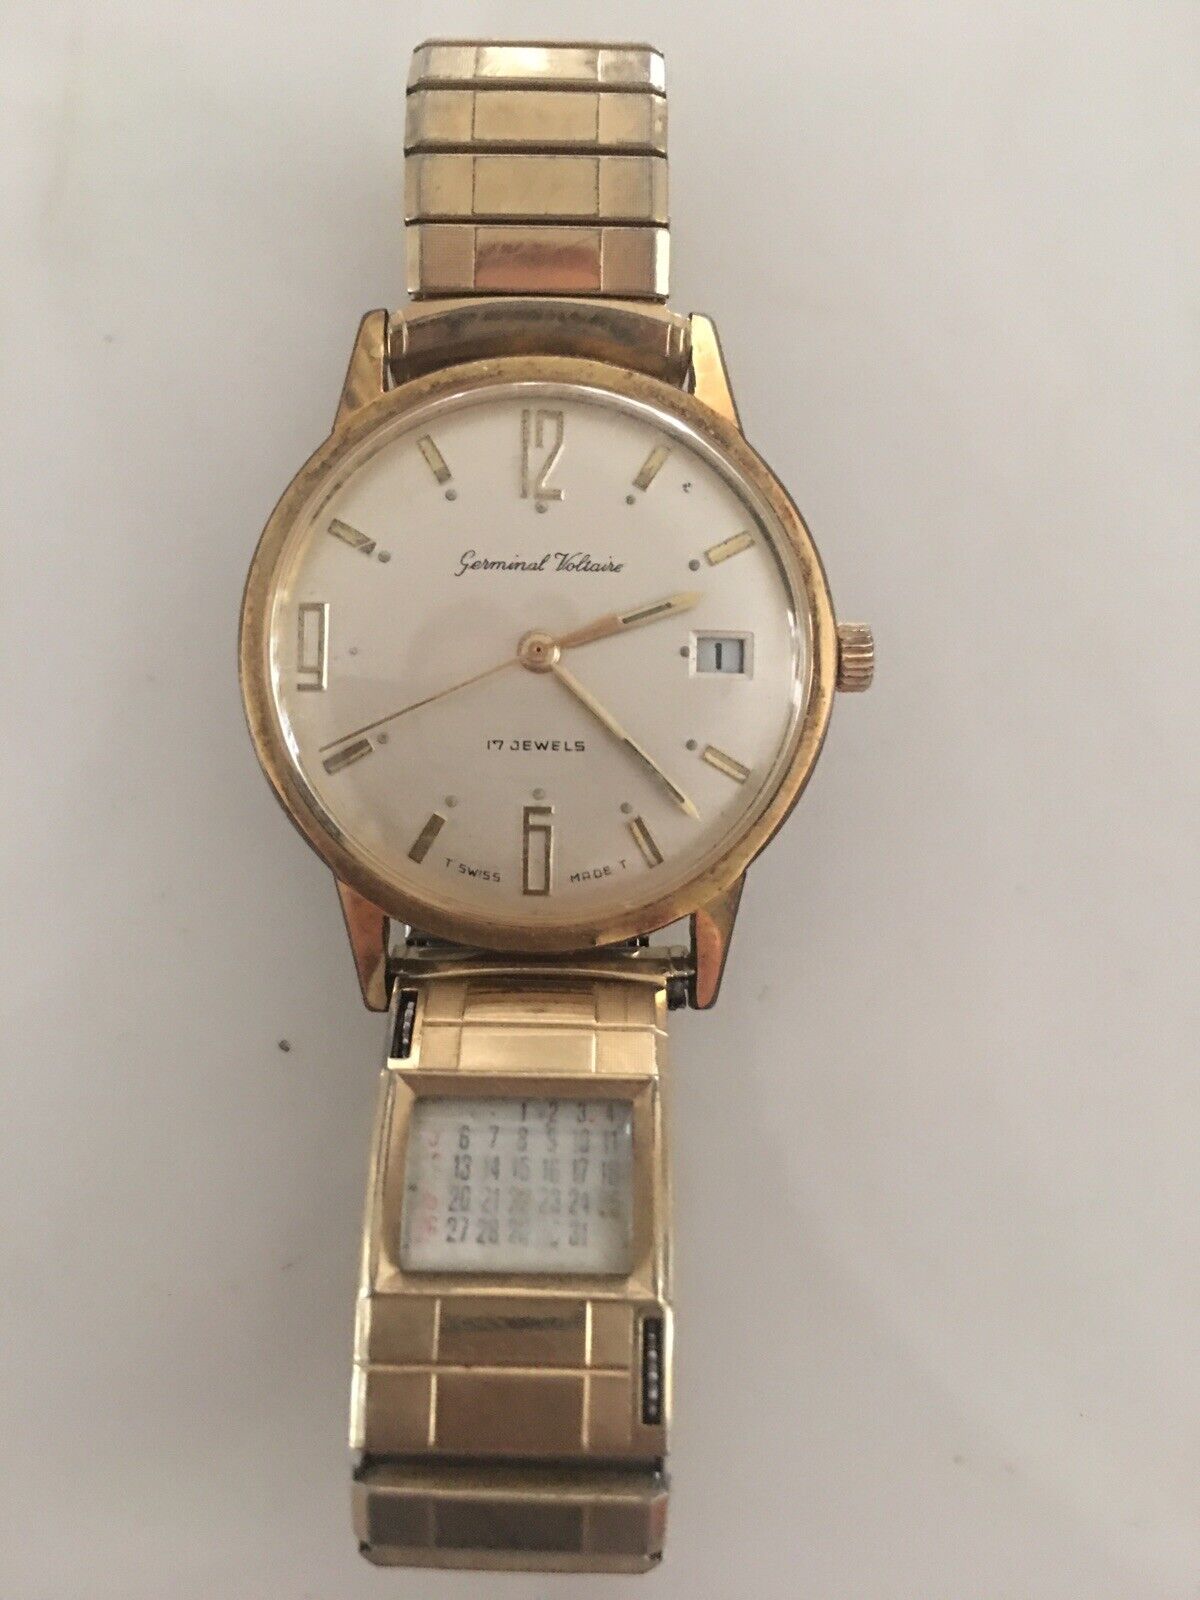 Vintage Germinal Voltaire Mens Wrist Watch Date 17 Jewel Swiss Made Runs Great!